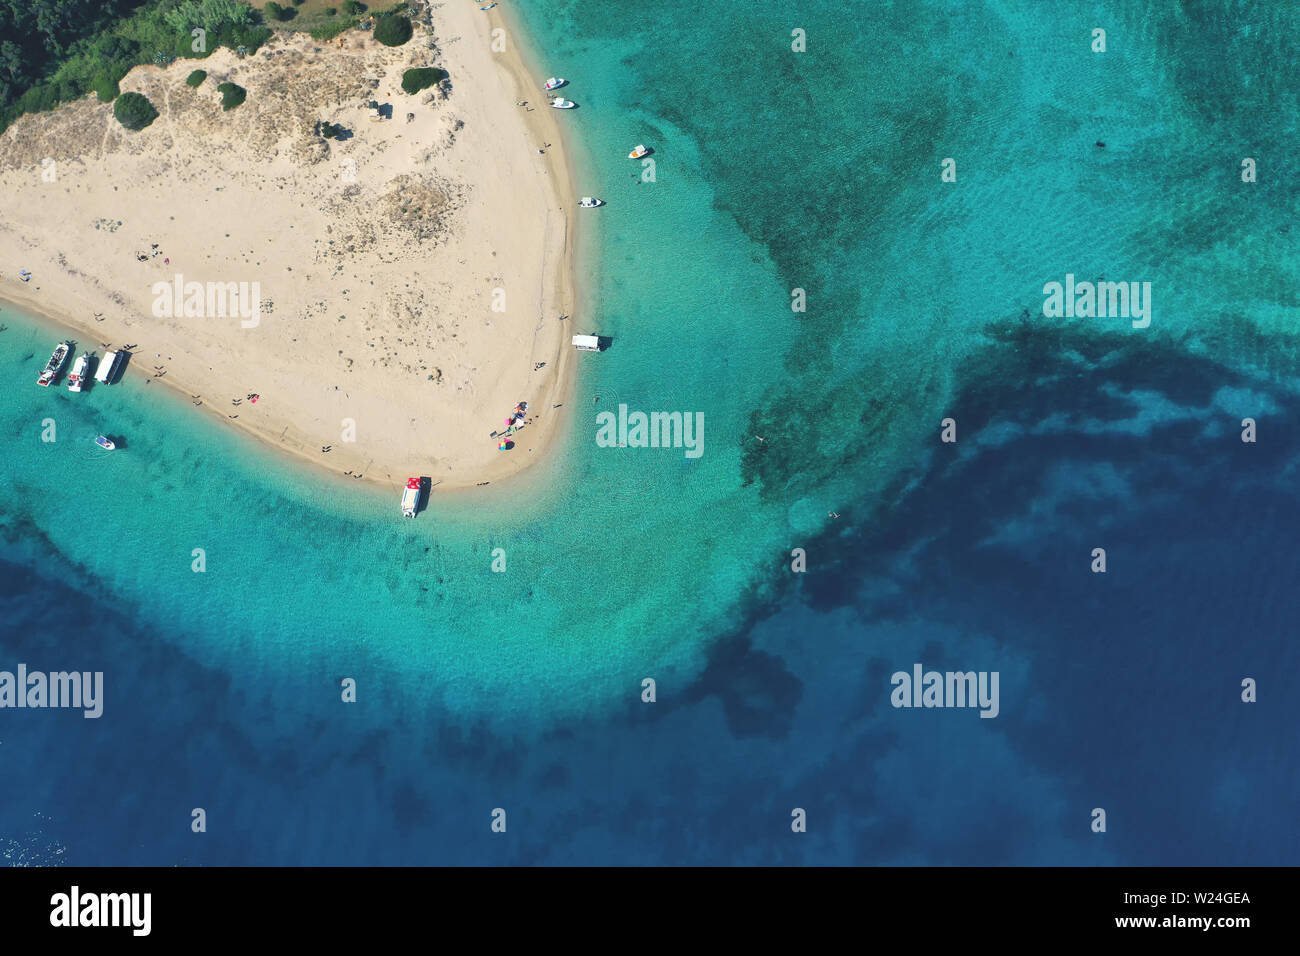 Antena drone ver iconos pequeños inhabitada isla de Marathonisi con agua clara orilla arenosa y criadero natural de mar Caretta-Caretta turt Foto de stock